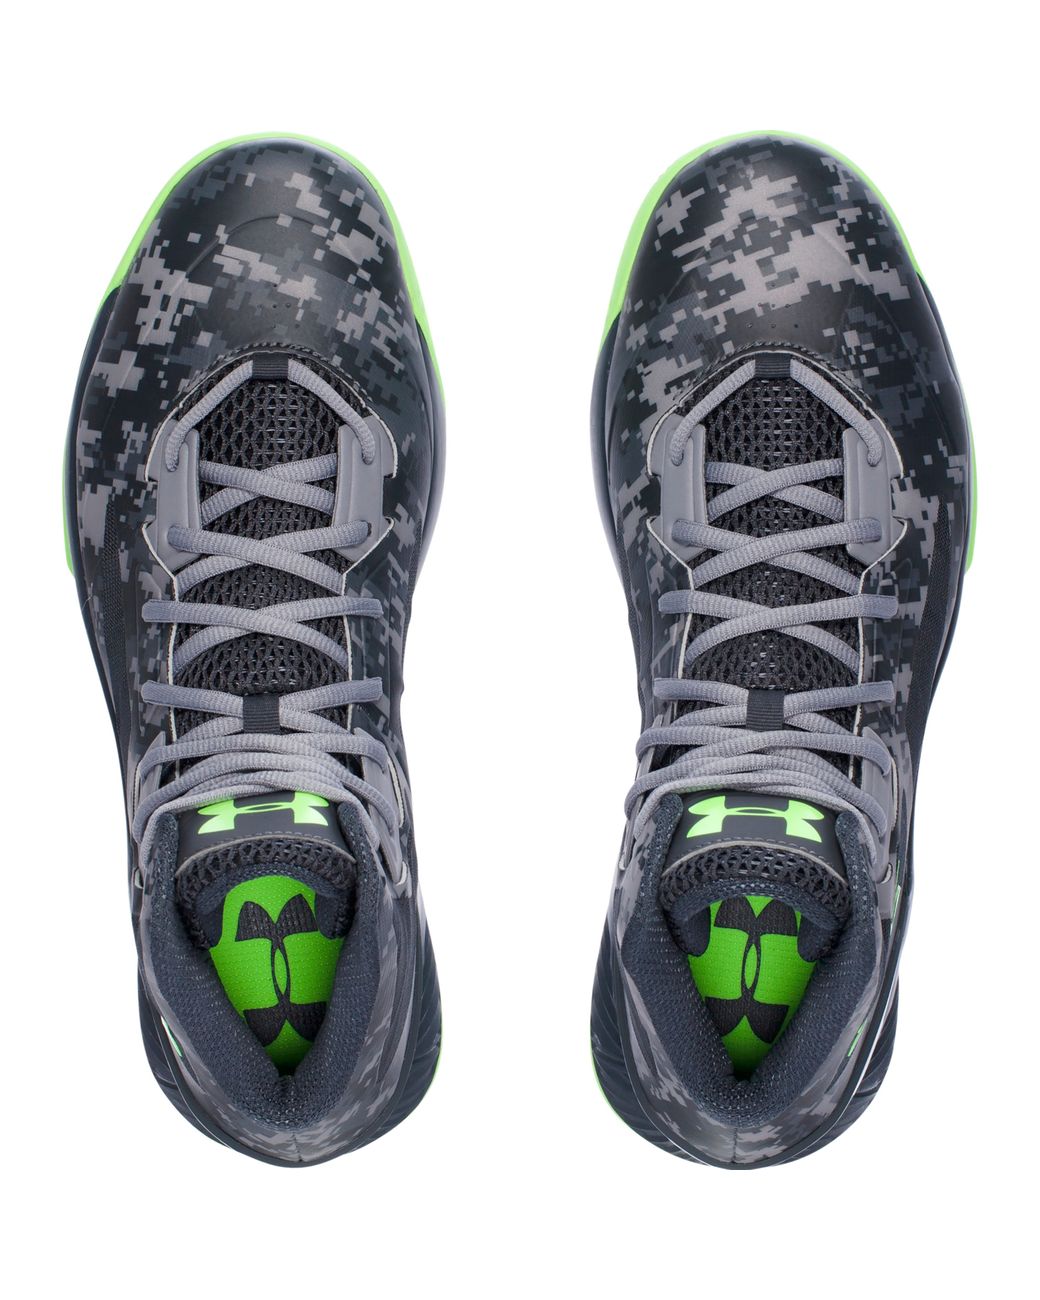 Under Armour Men's Ua Lightning 3 Basketball Shoes for Men | Lyst